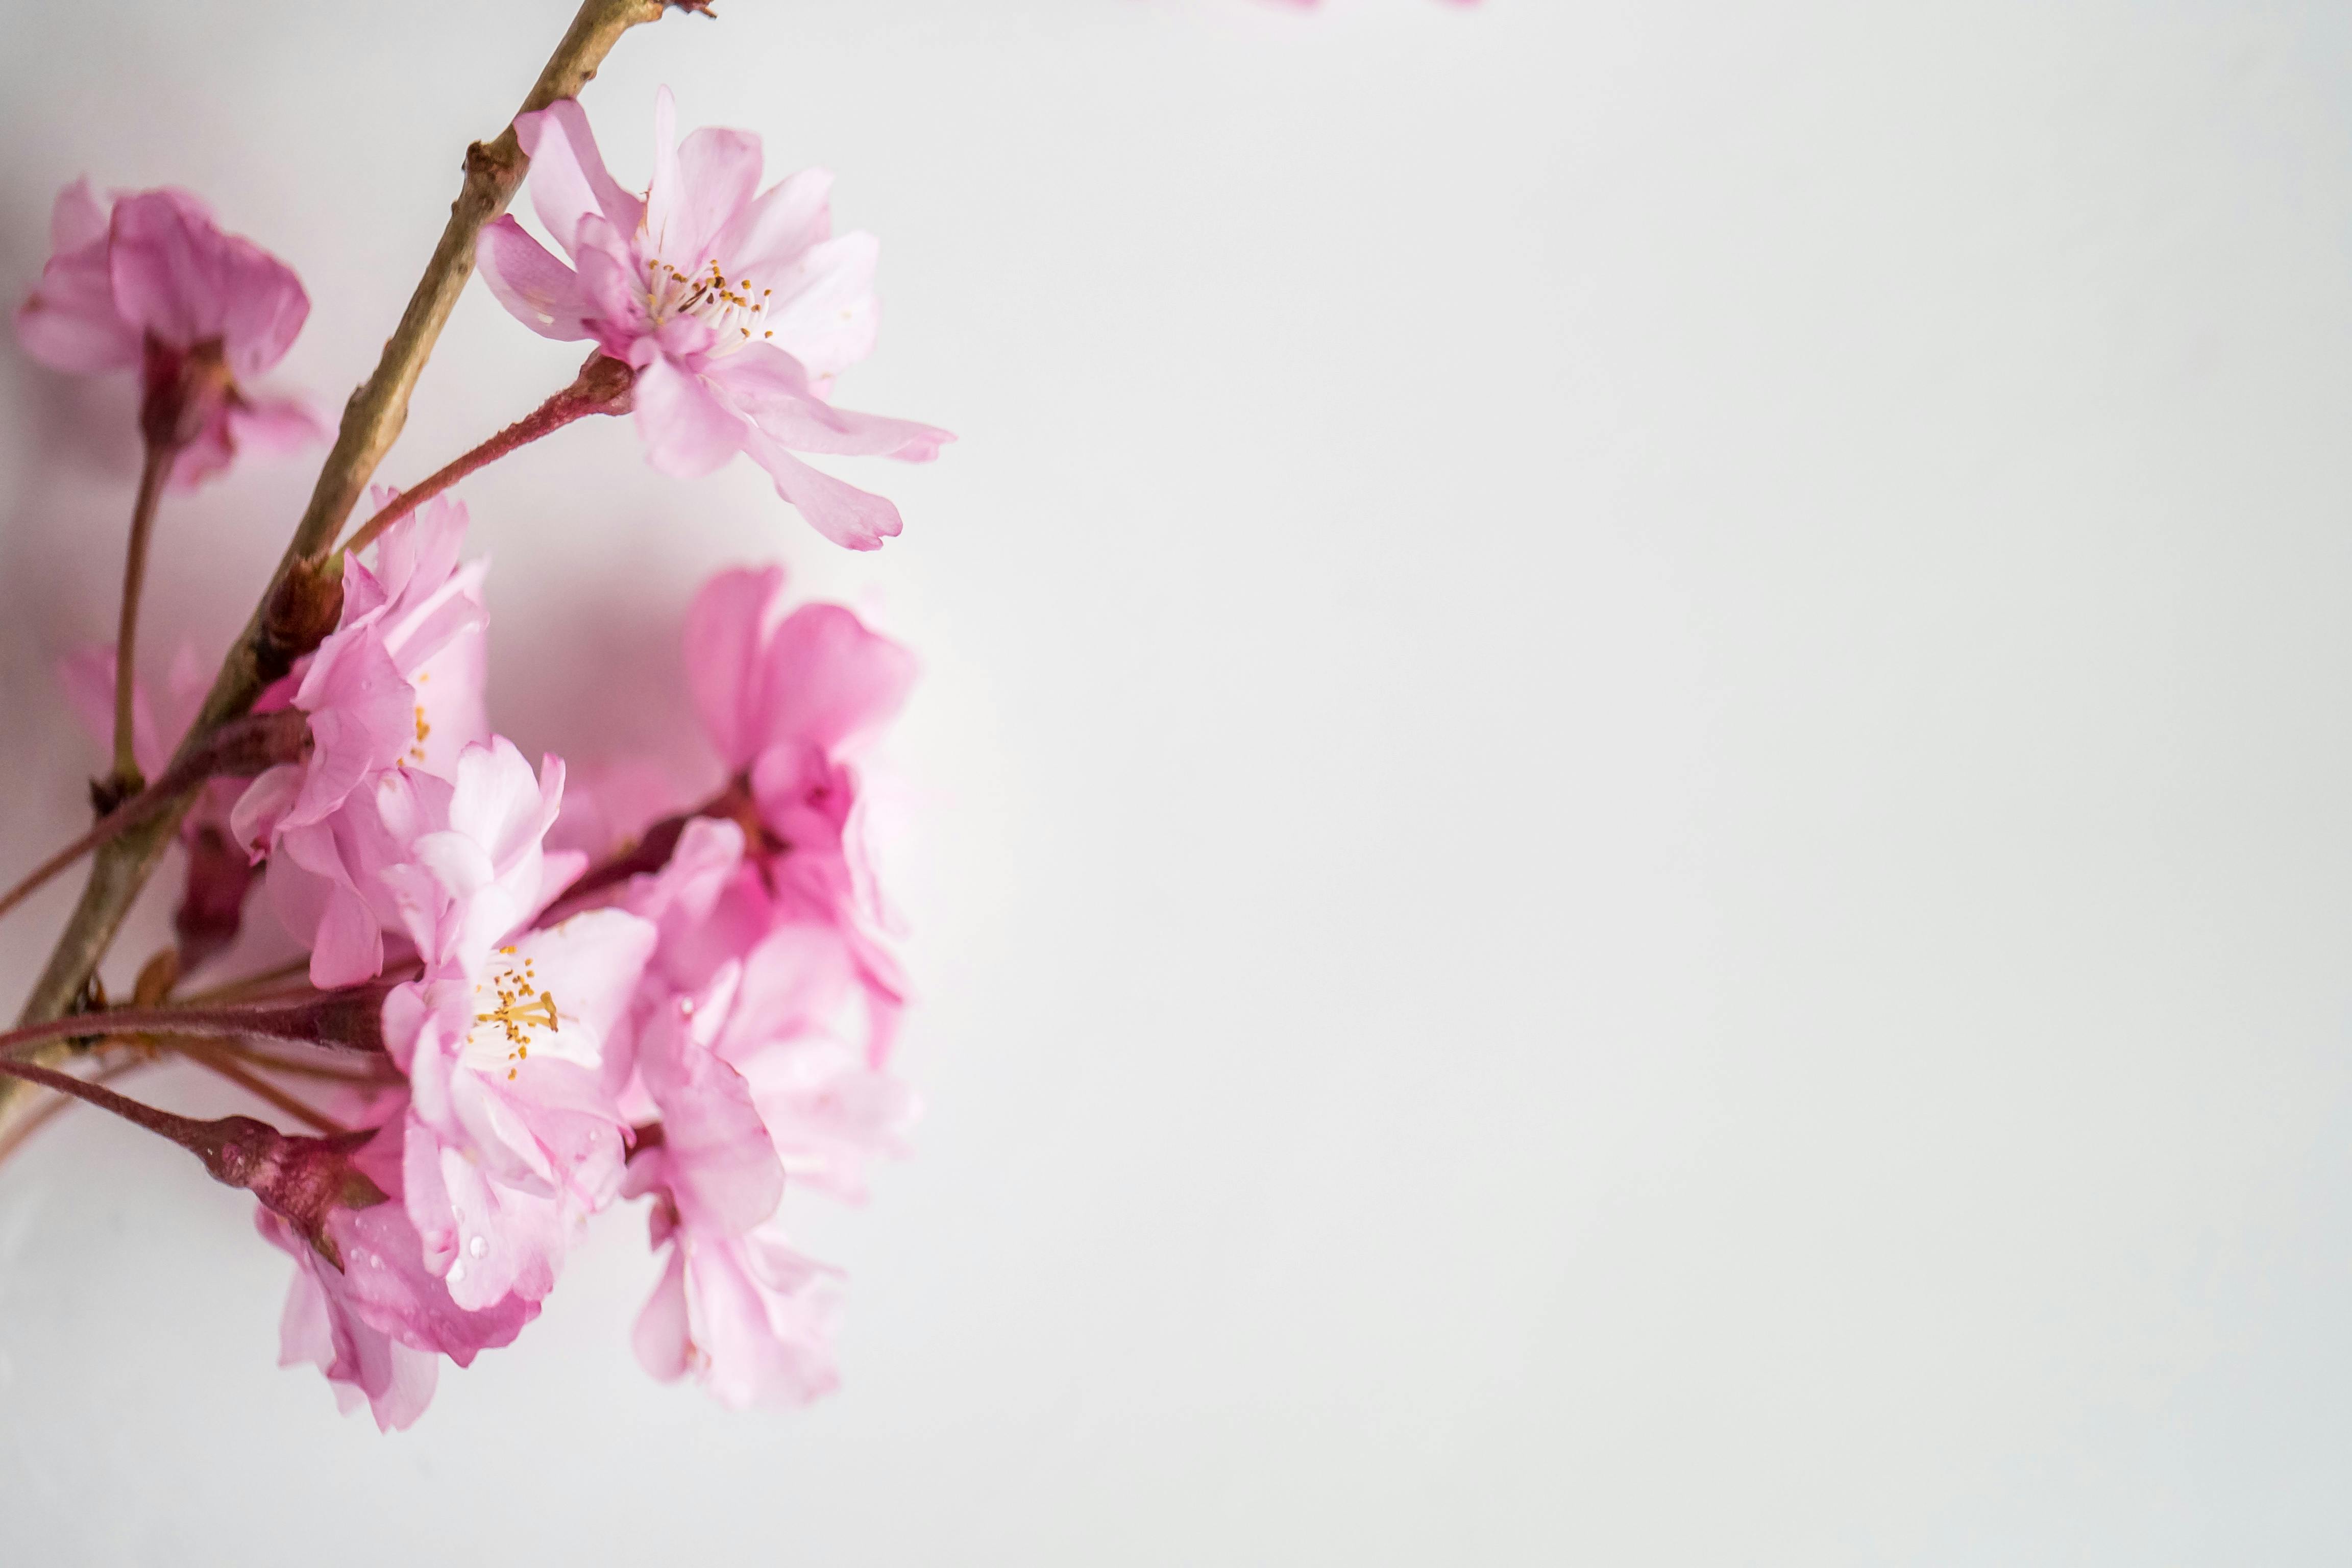 Blooming Sakura tree in summer garden · Free Stock Photo